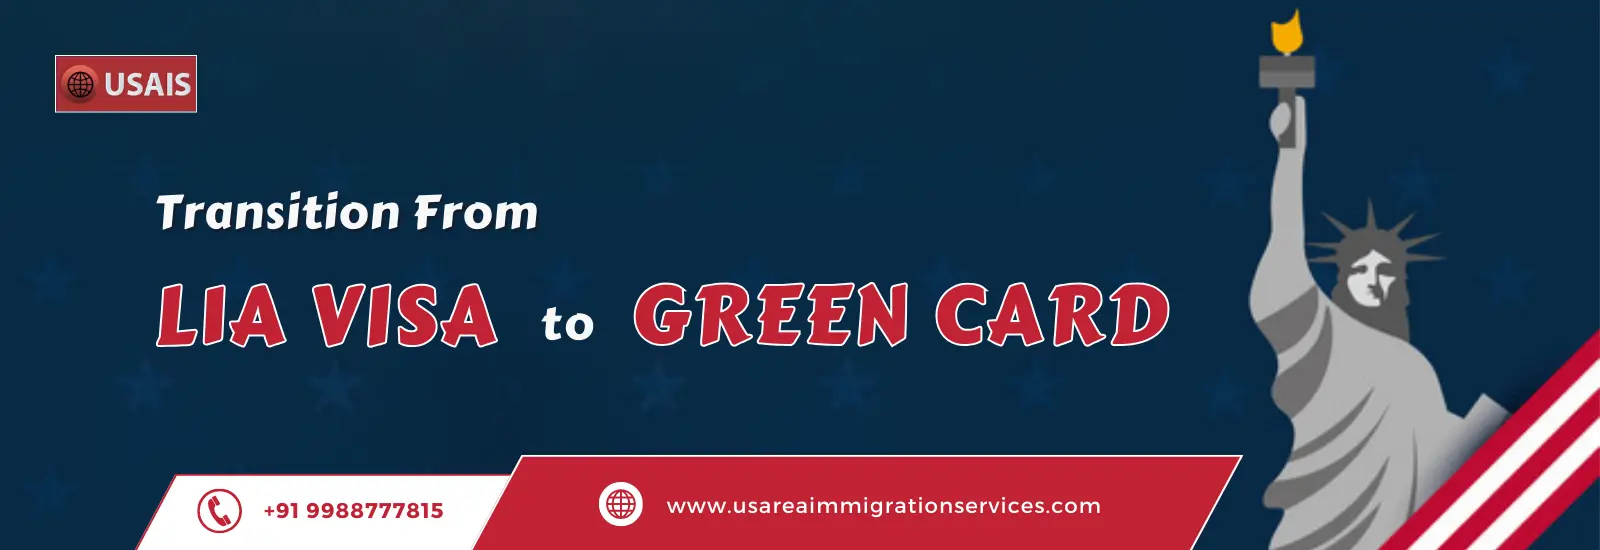 L1A-Visa-To-Green-Card